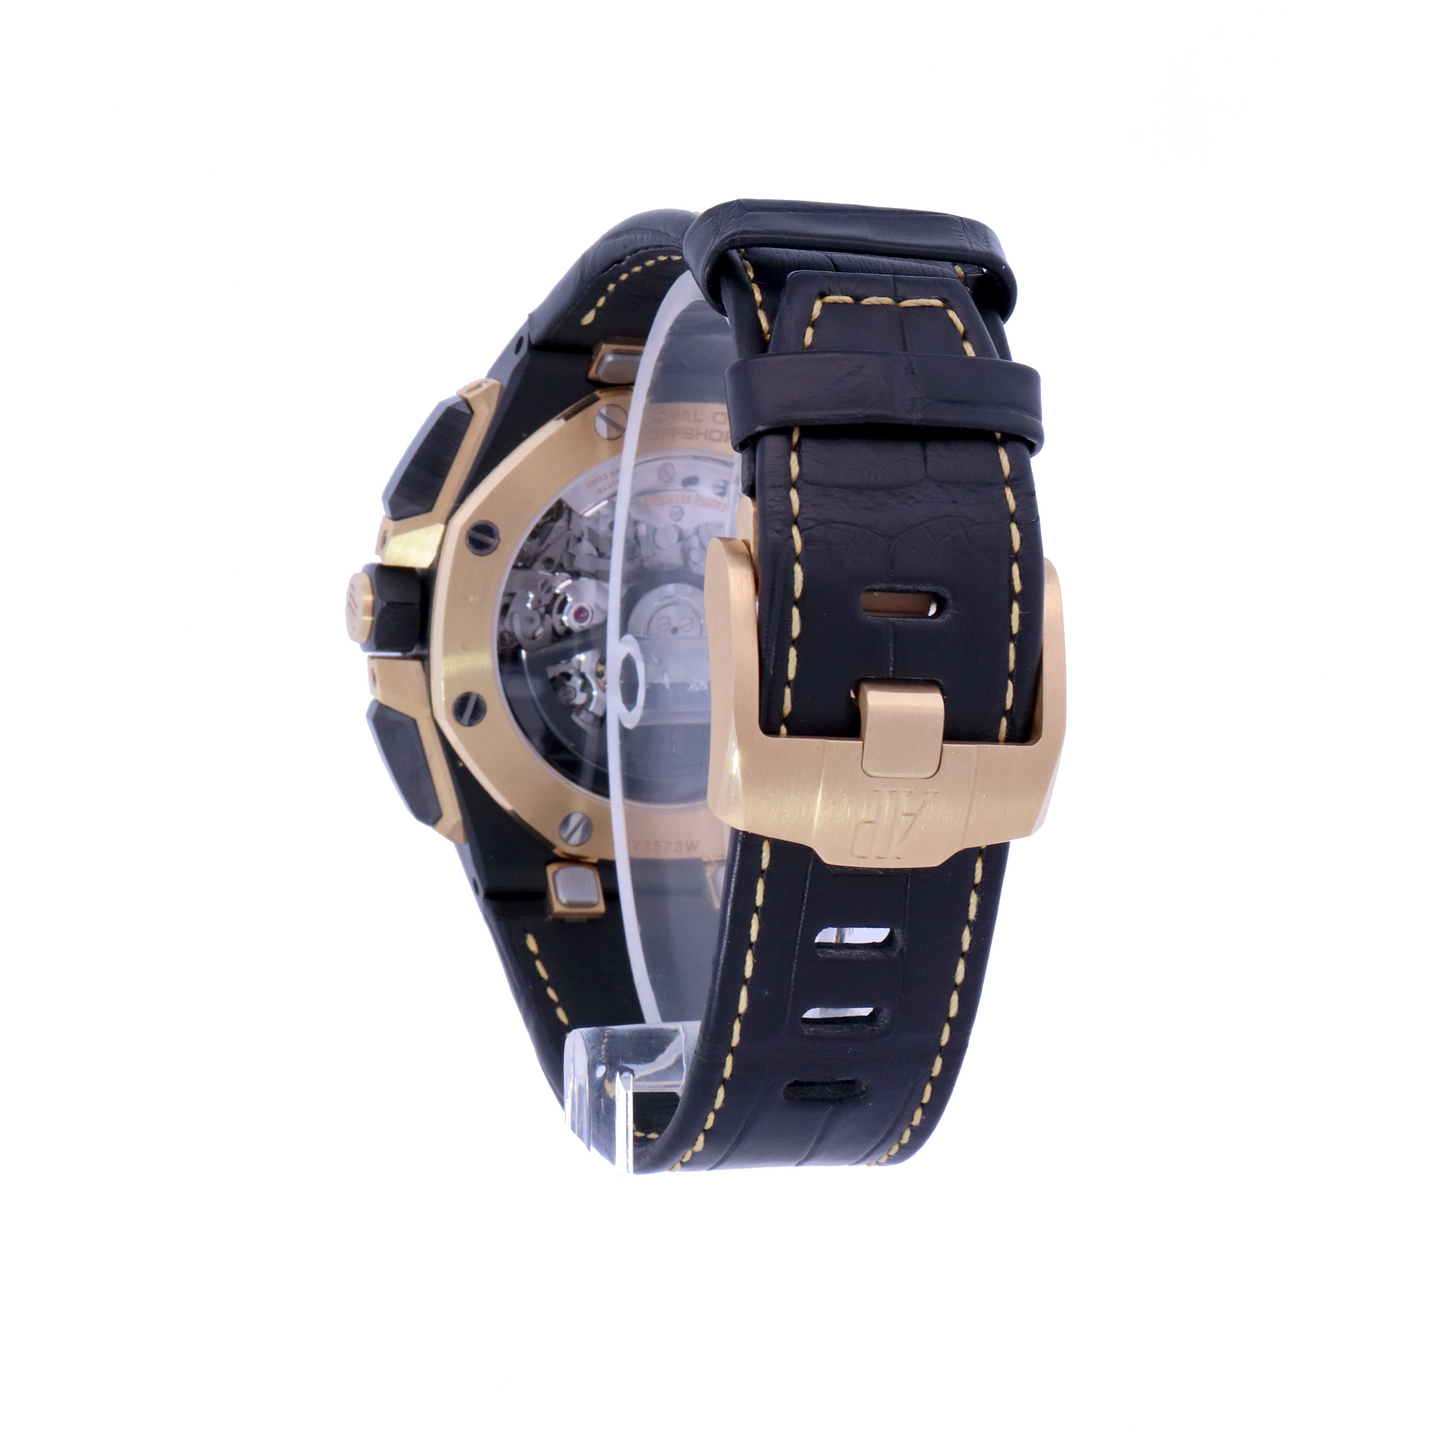 Audemars Piguet Royal Oak Offshore Black Ceramic & Yellow Gold 43mm Black Chronograph Dial Watch | Ref# 26420CE.OO.A127CR.01 - Happy Jewelers Fine Jewelry Lifetime Warranty